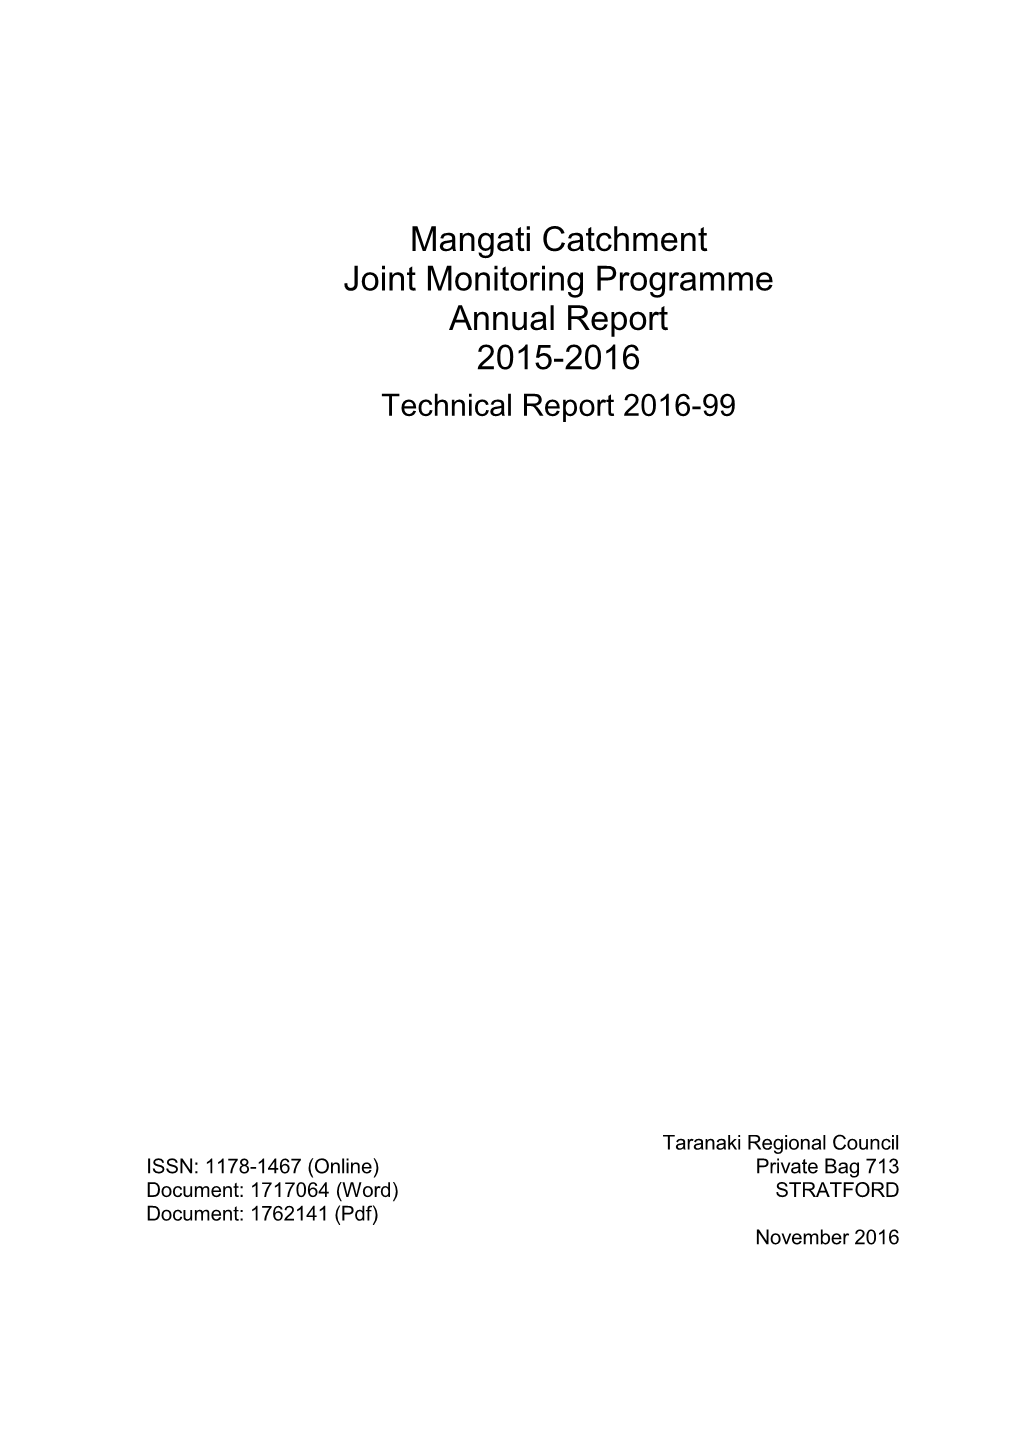 Mangati Catchment Consent Monitoring Report